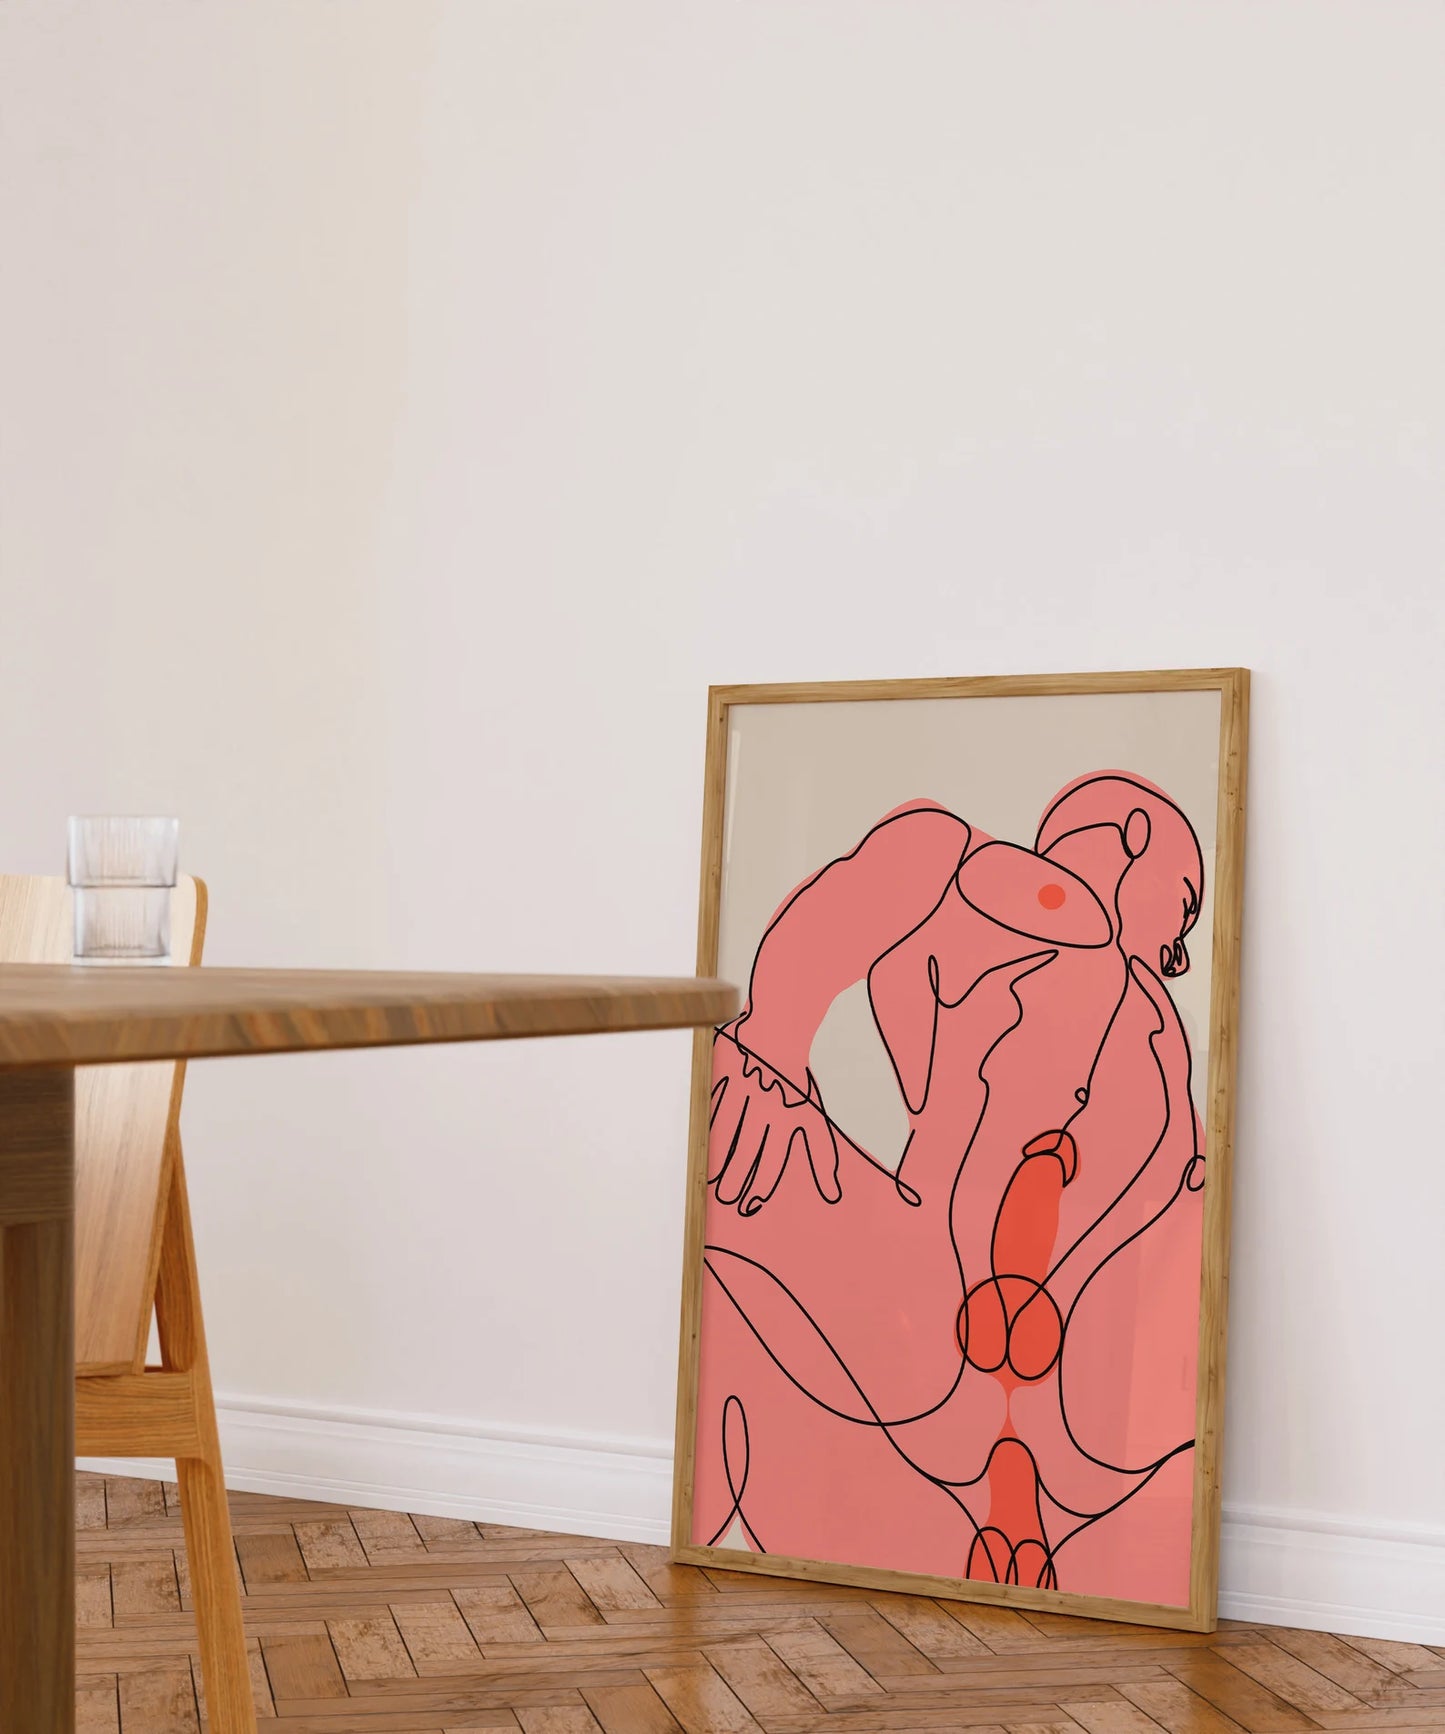 Abstract Gay Art Print Minimalist Line Art, Male Figure Sketch Home Decor